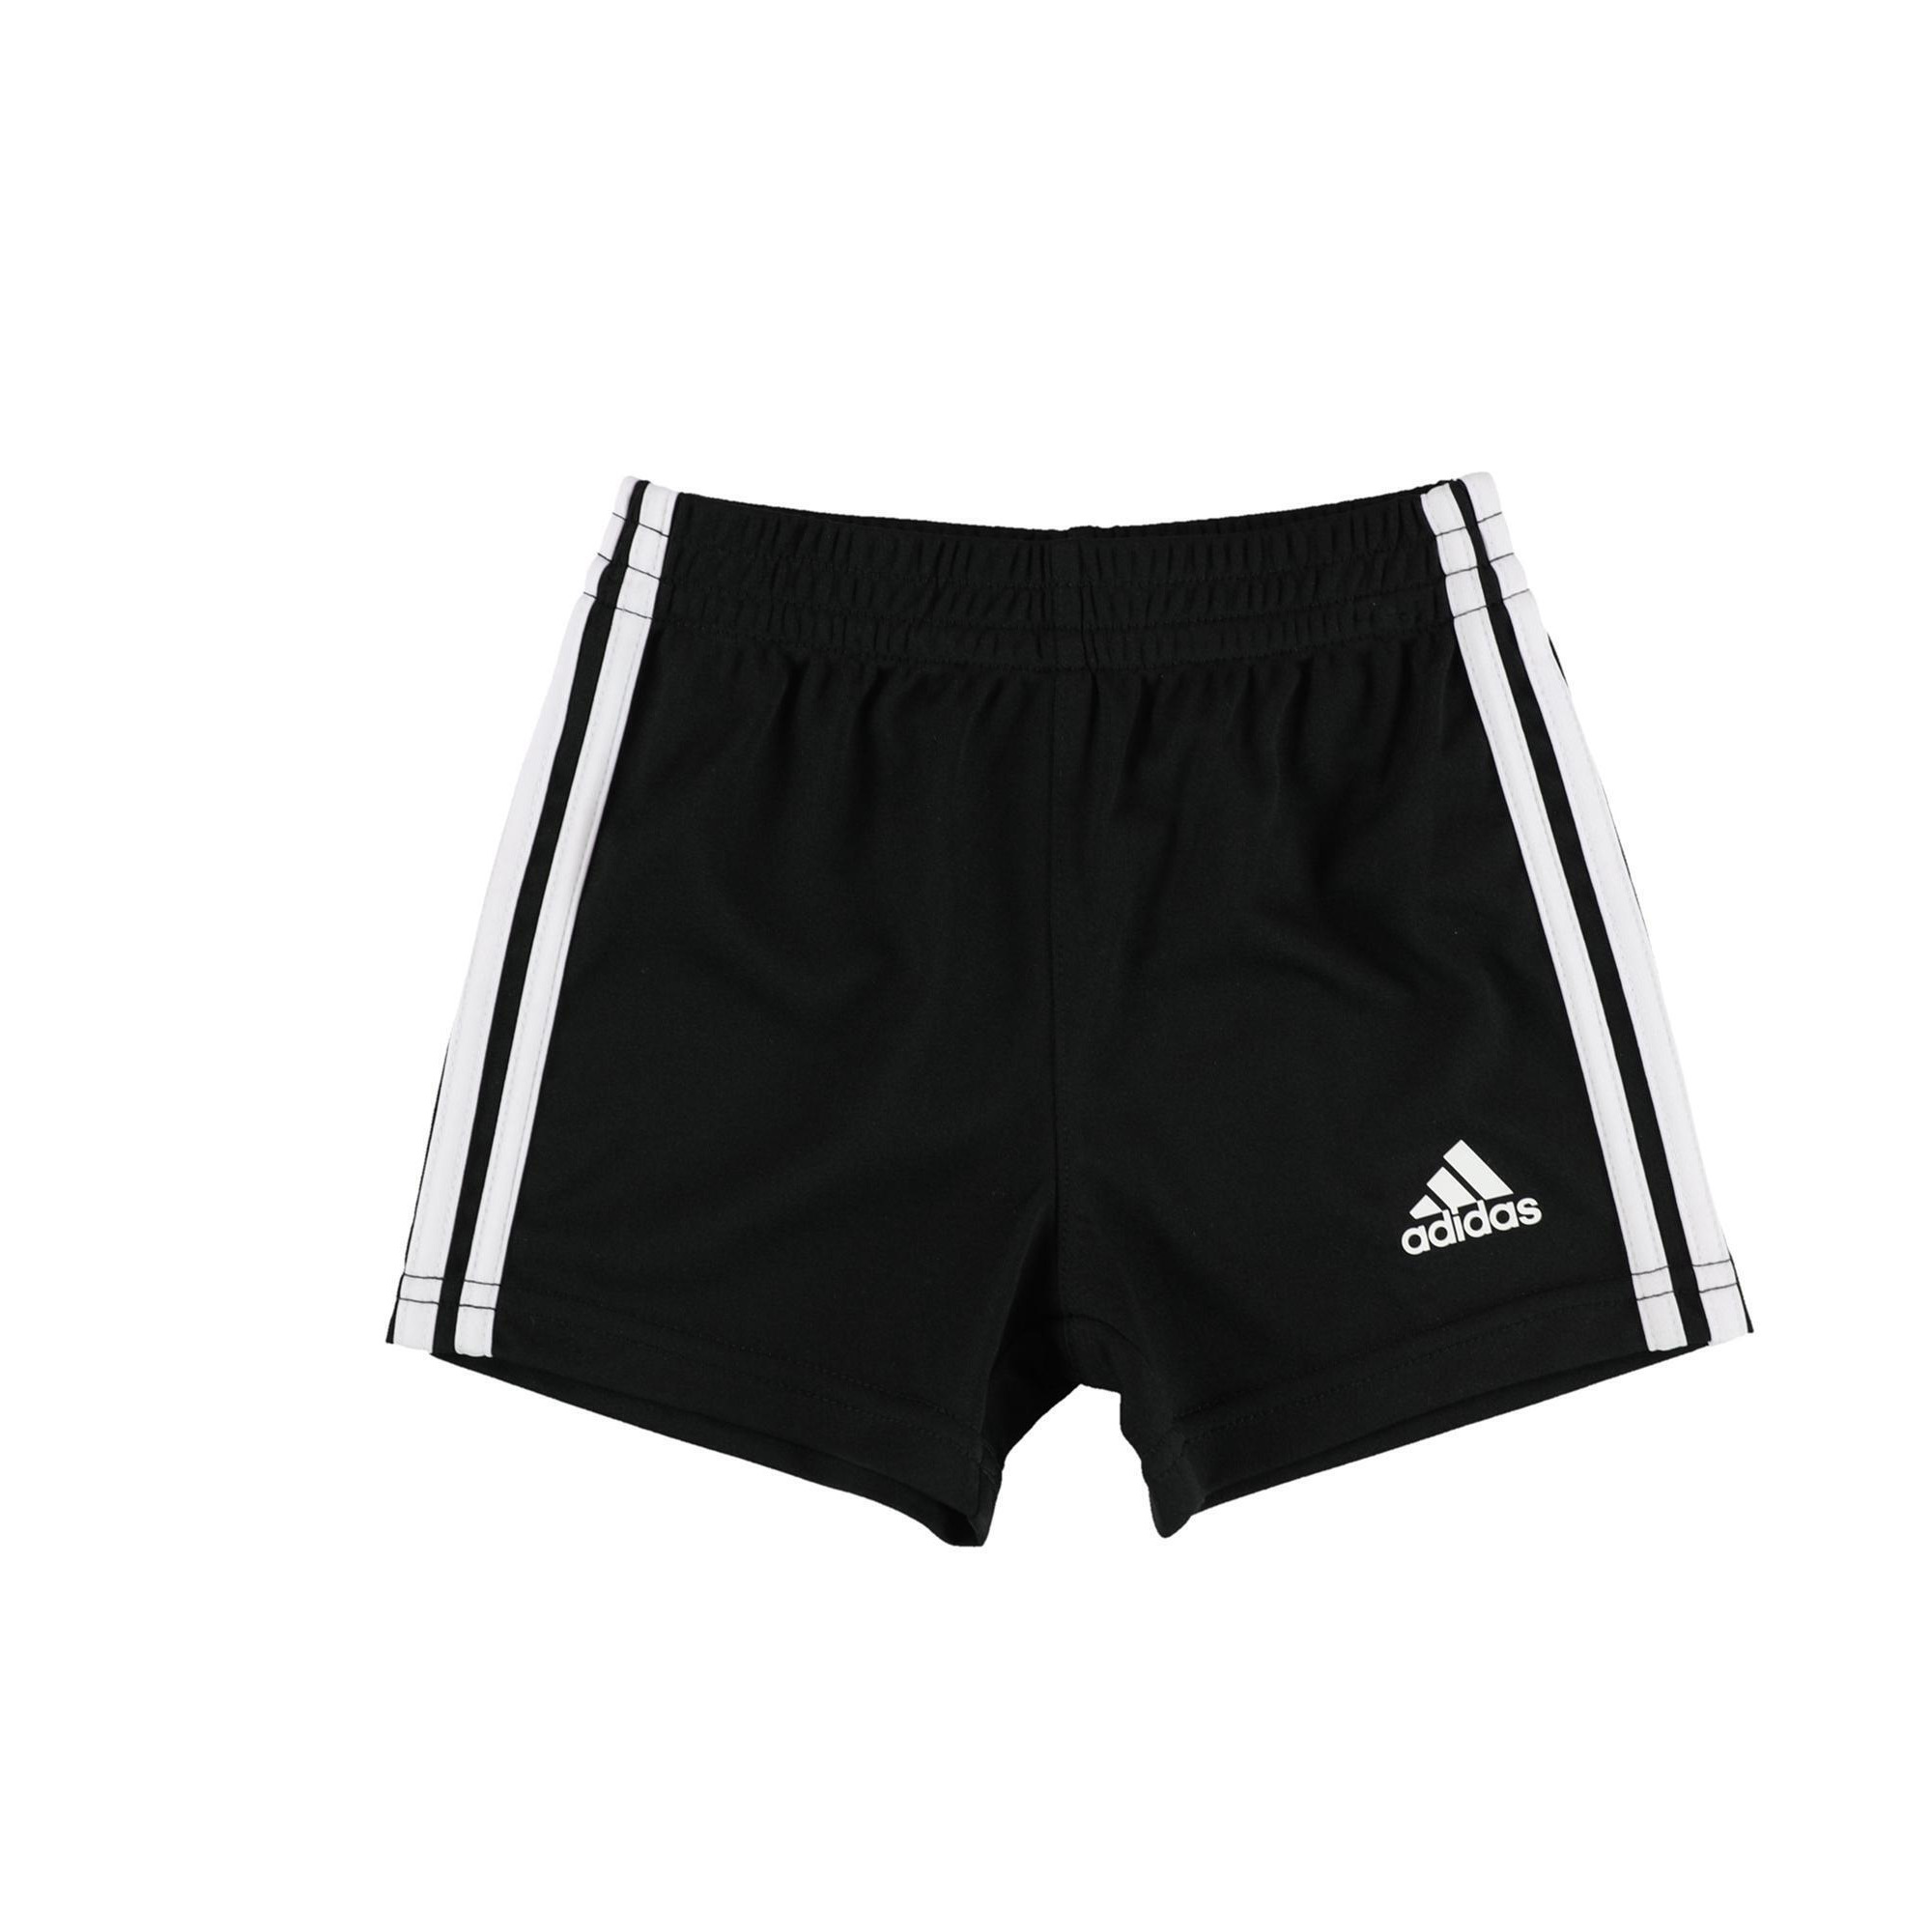 Adidas Boys Two Tone Athletic Walking Shorts, Style # AG6285N-B